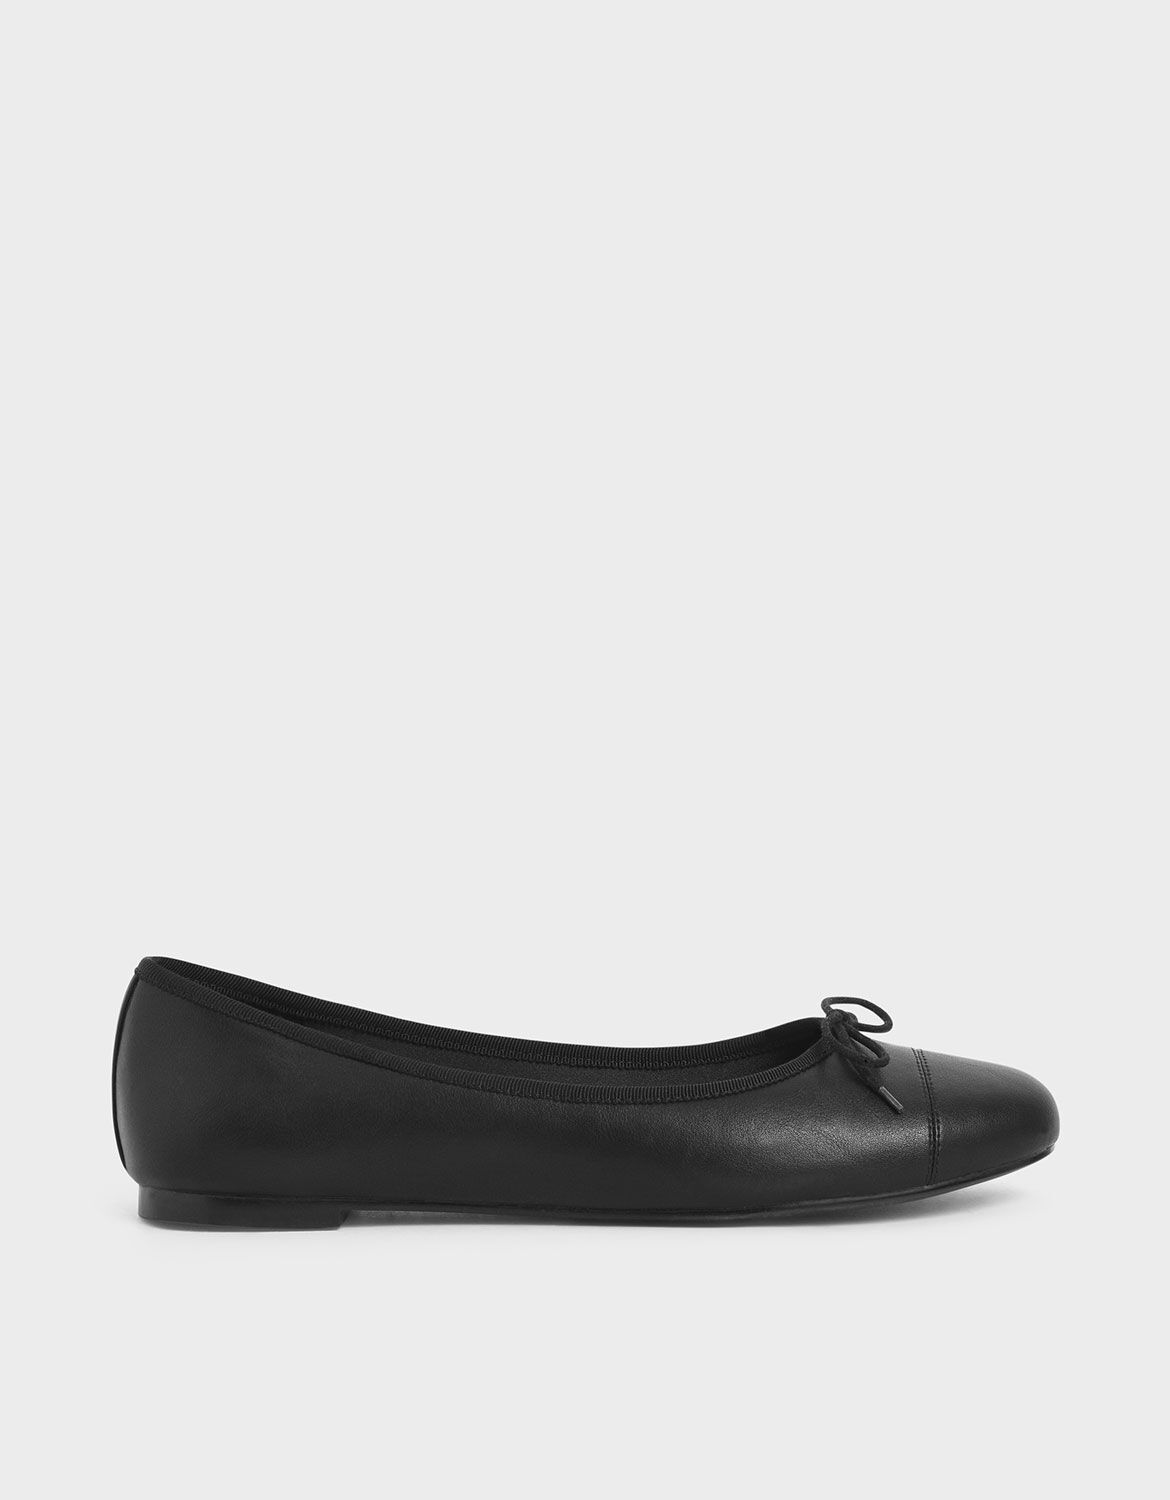 black ballerinas shoes